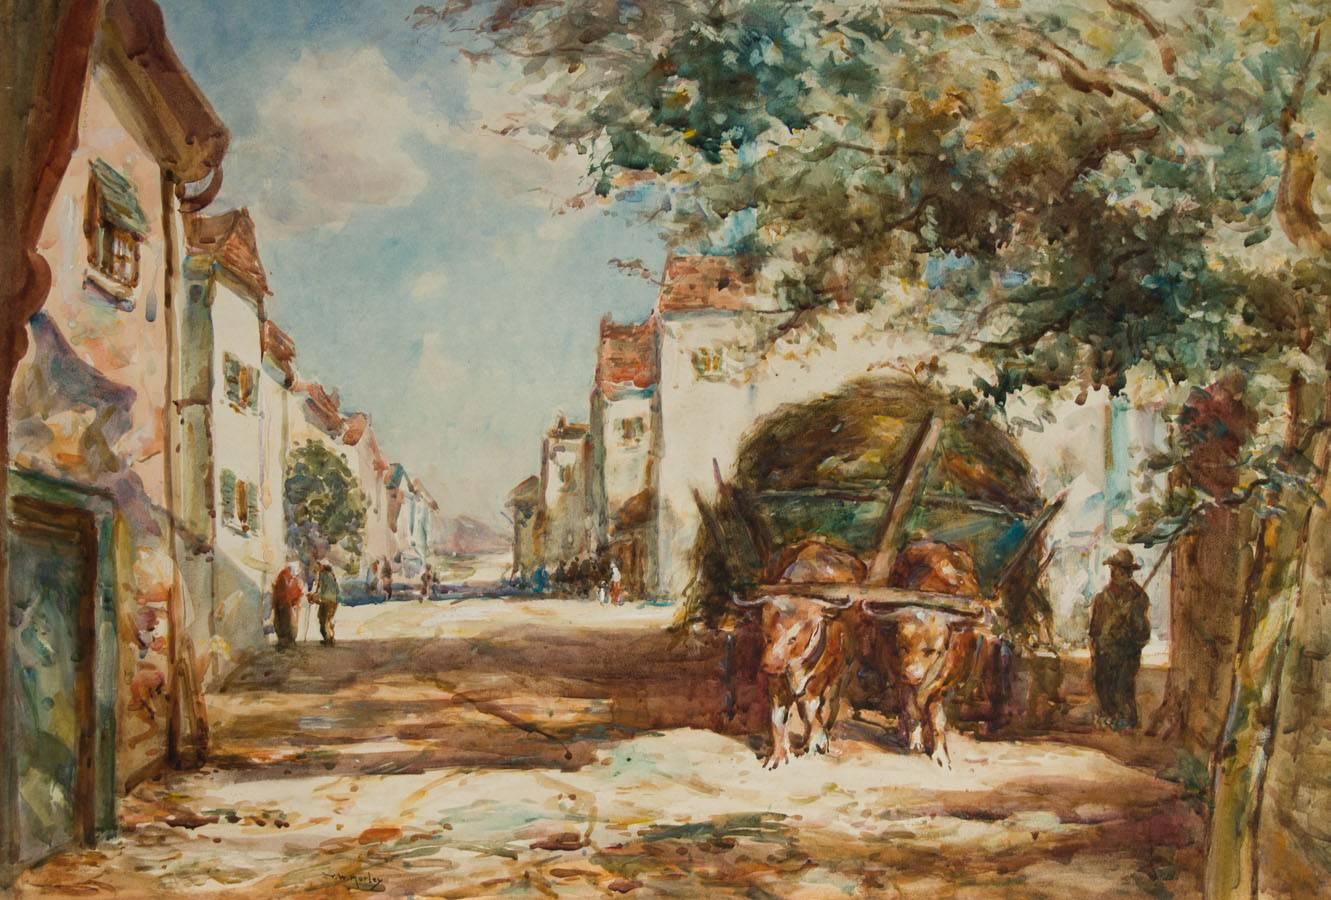 Thomas William Morley (1859-1925) – Aquarell des frühen 20. Jahrhunderts, Straßenszene